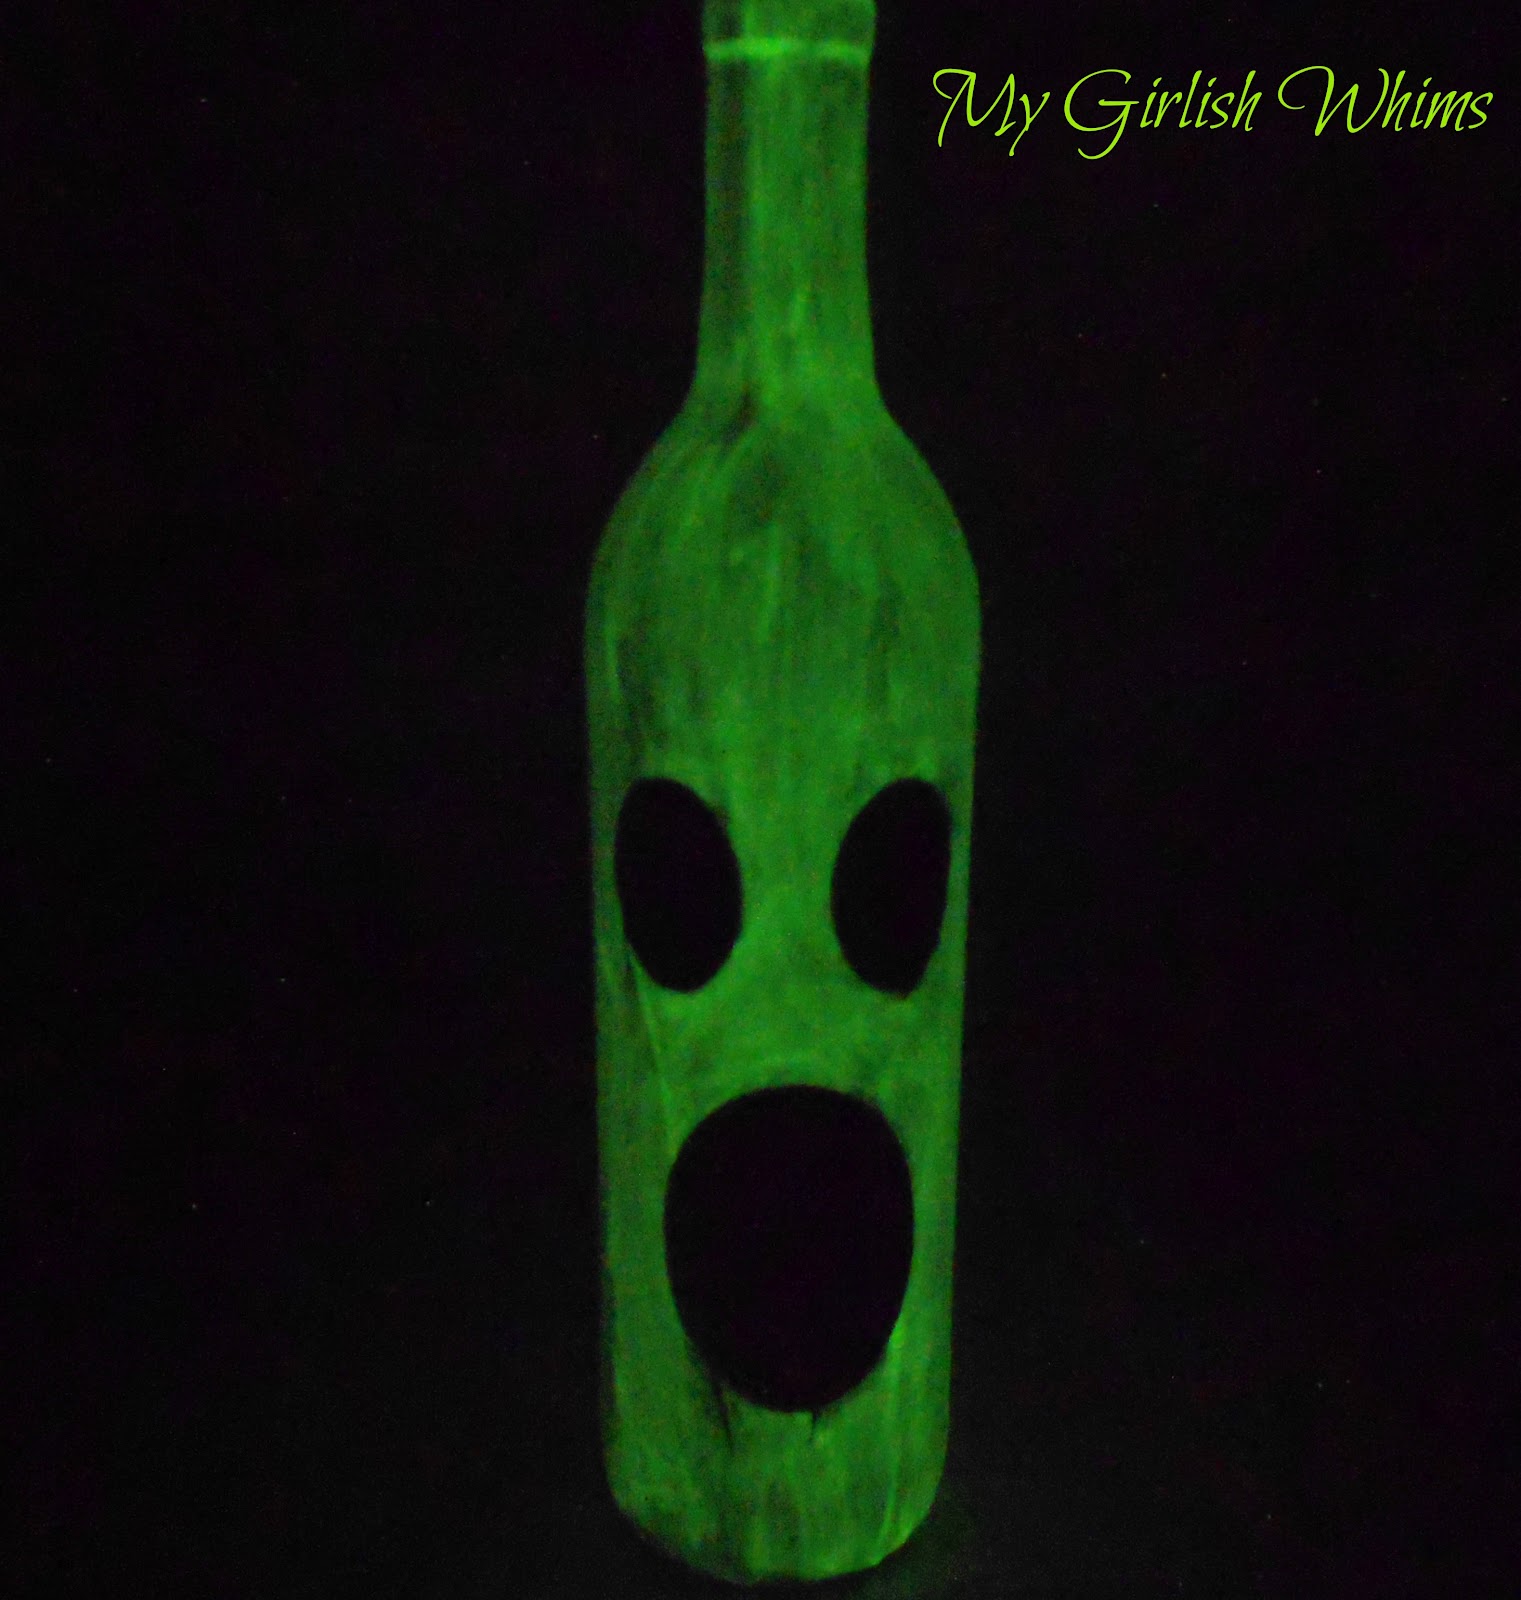 Not So Scary Halloween Monsters: Glow in the Dark Mason Jars